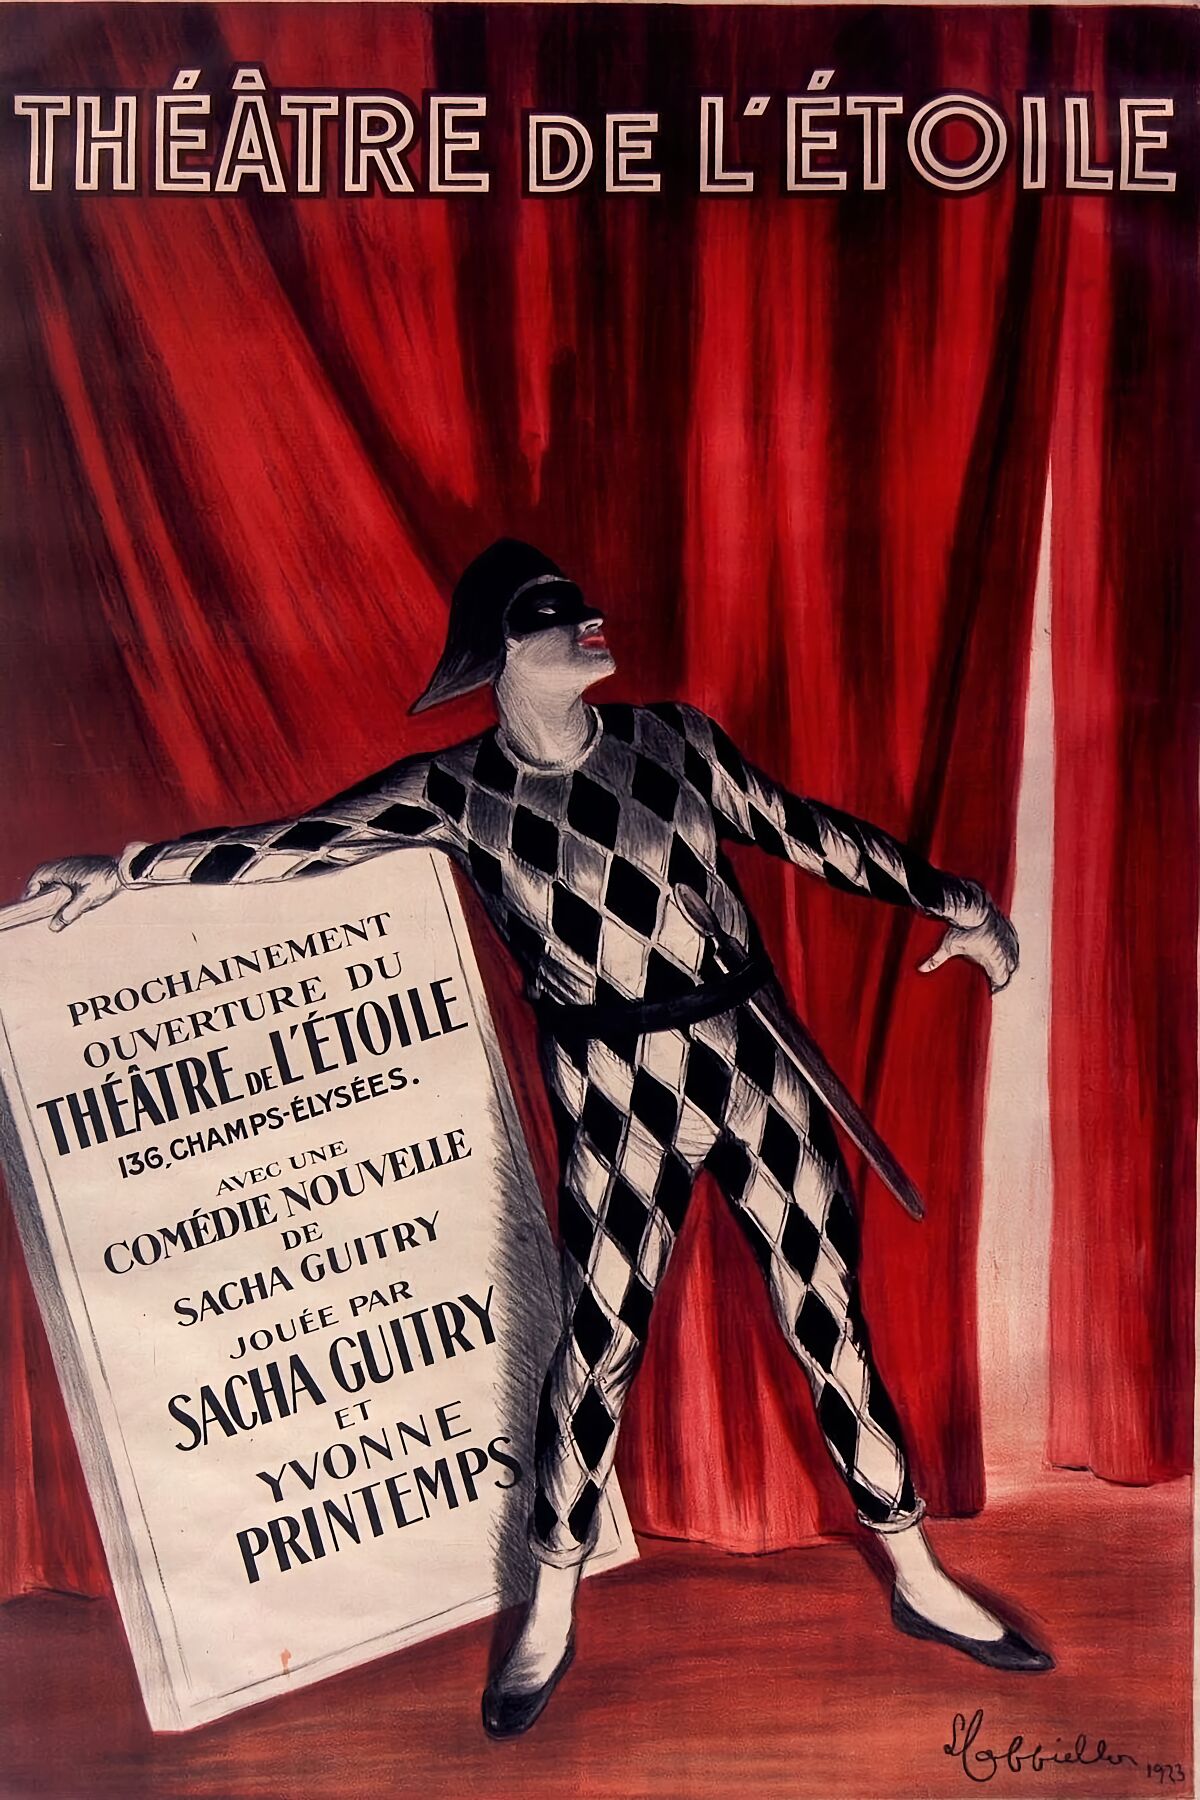 Poster for the premiere of Sacha Guitry's play L'Accroche-cœur at the Théâtre de l'Étoile in Paris Date 1923 Leonetto Cappiello (1875-1942)